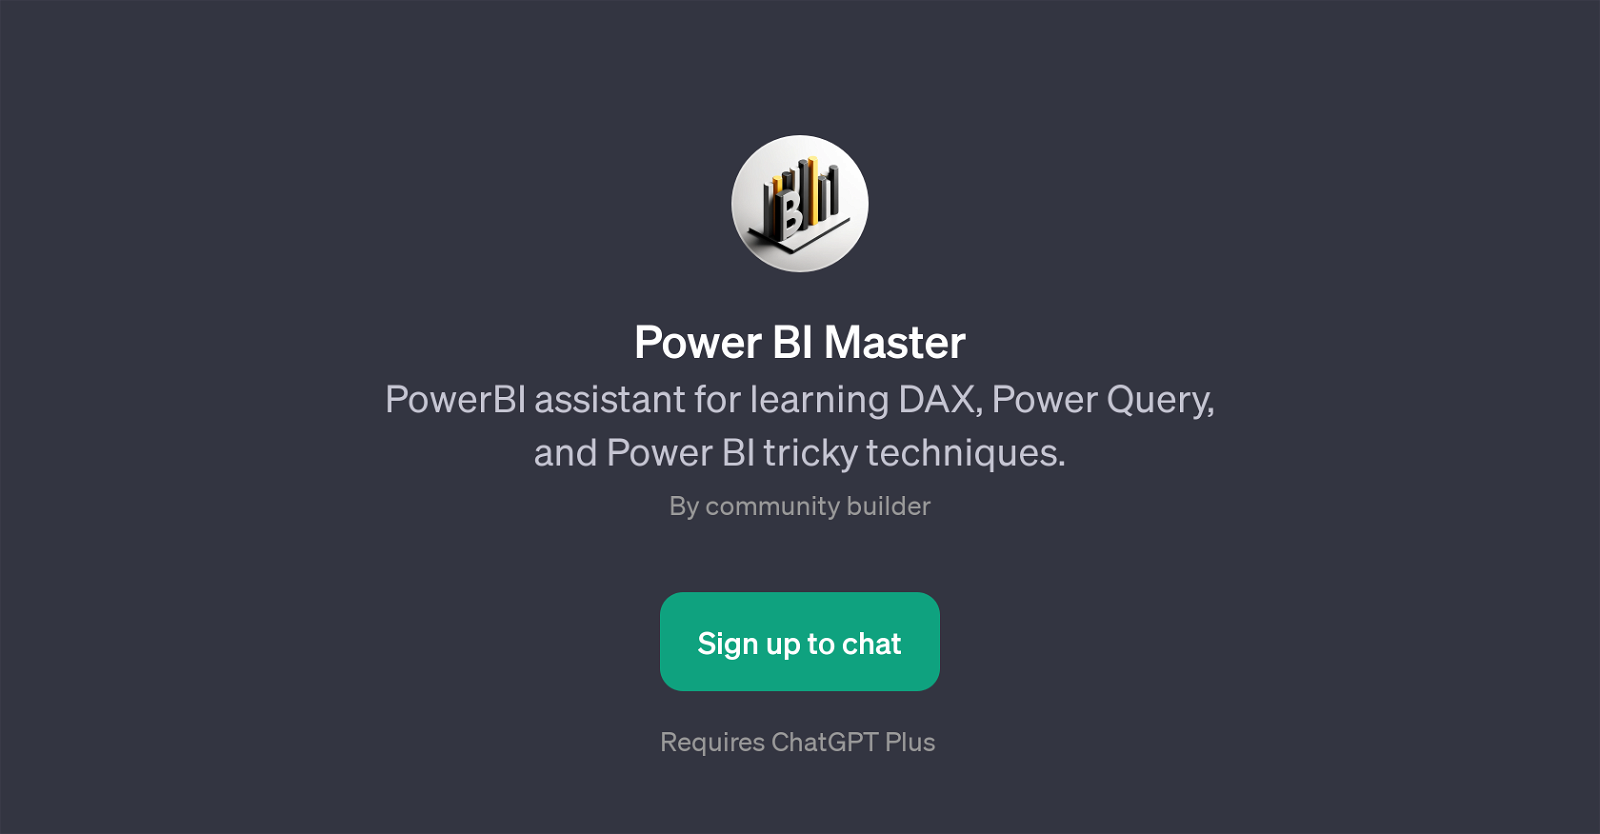 Power BI Master website